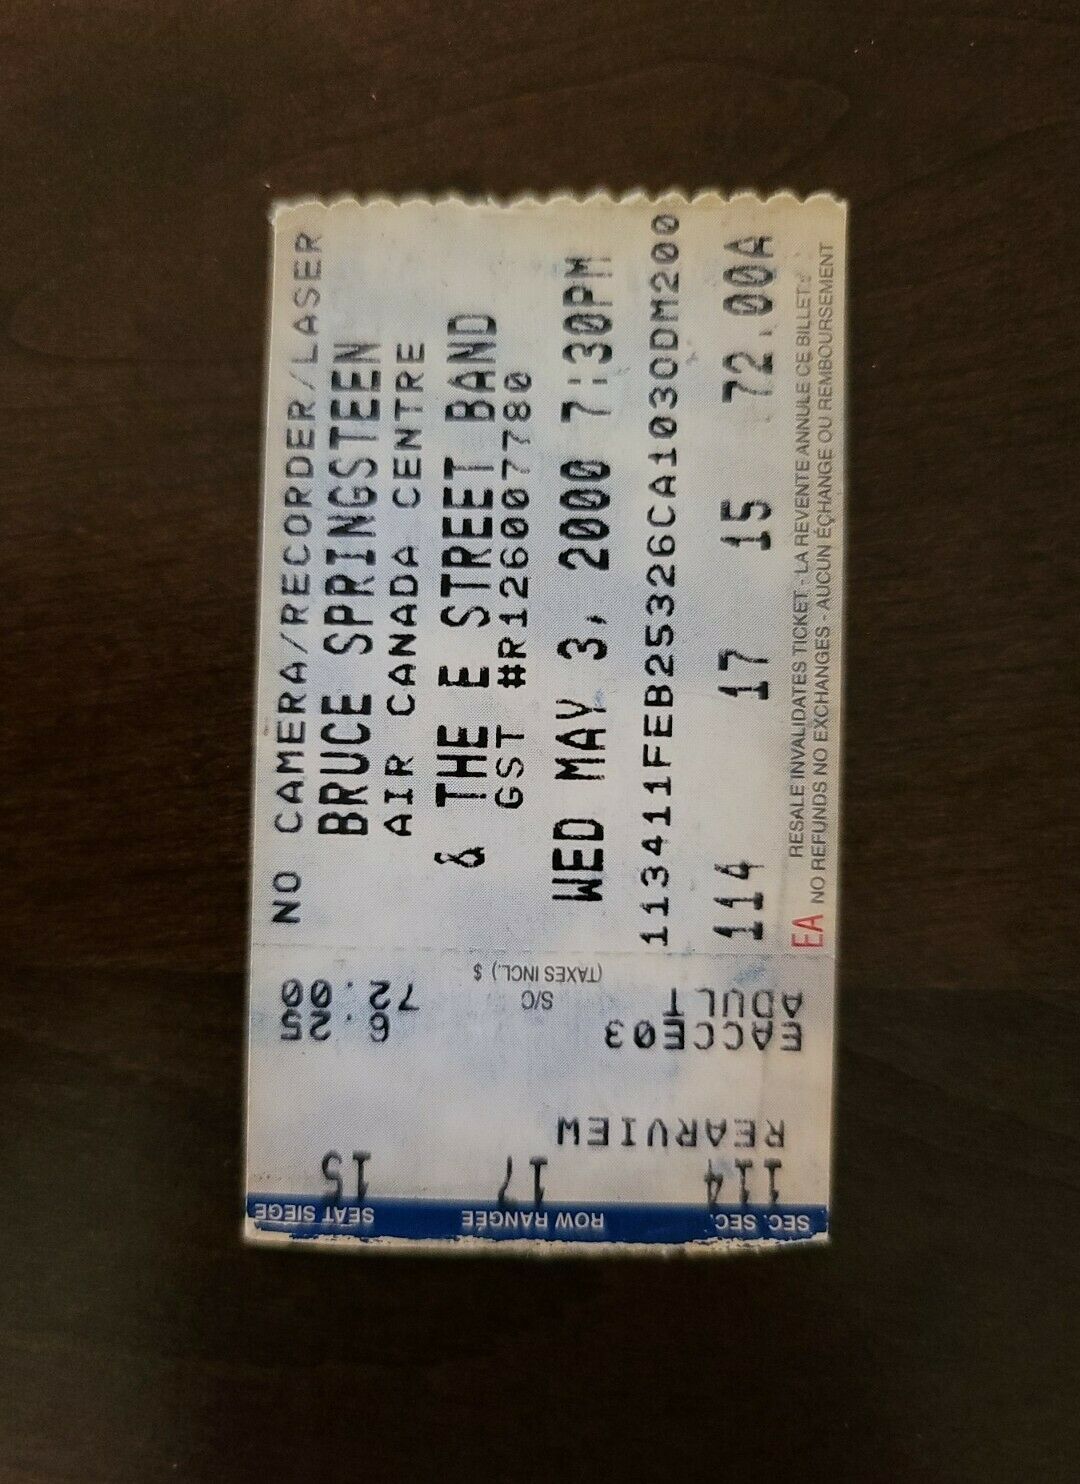 Bruce Springsteen 2000, Air Canada Centre Toronto Original Concert Ticket Stub